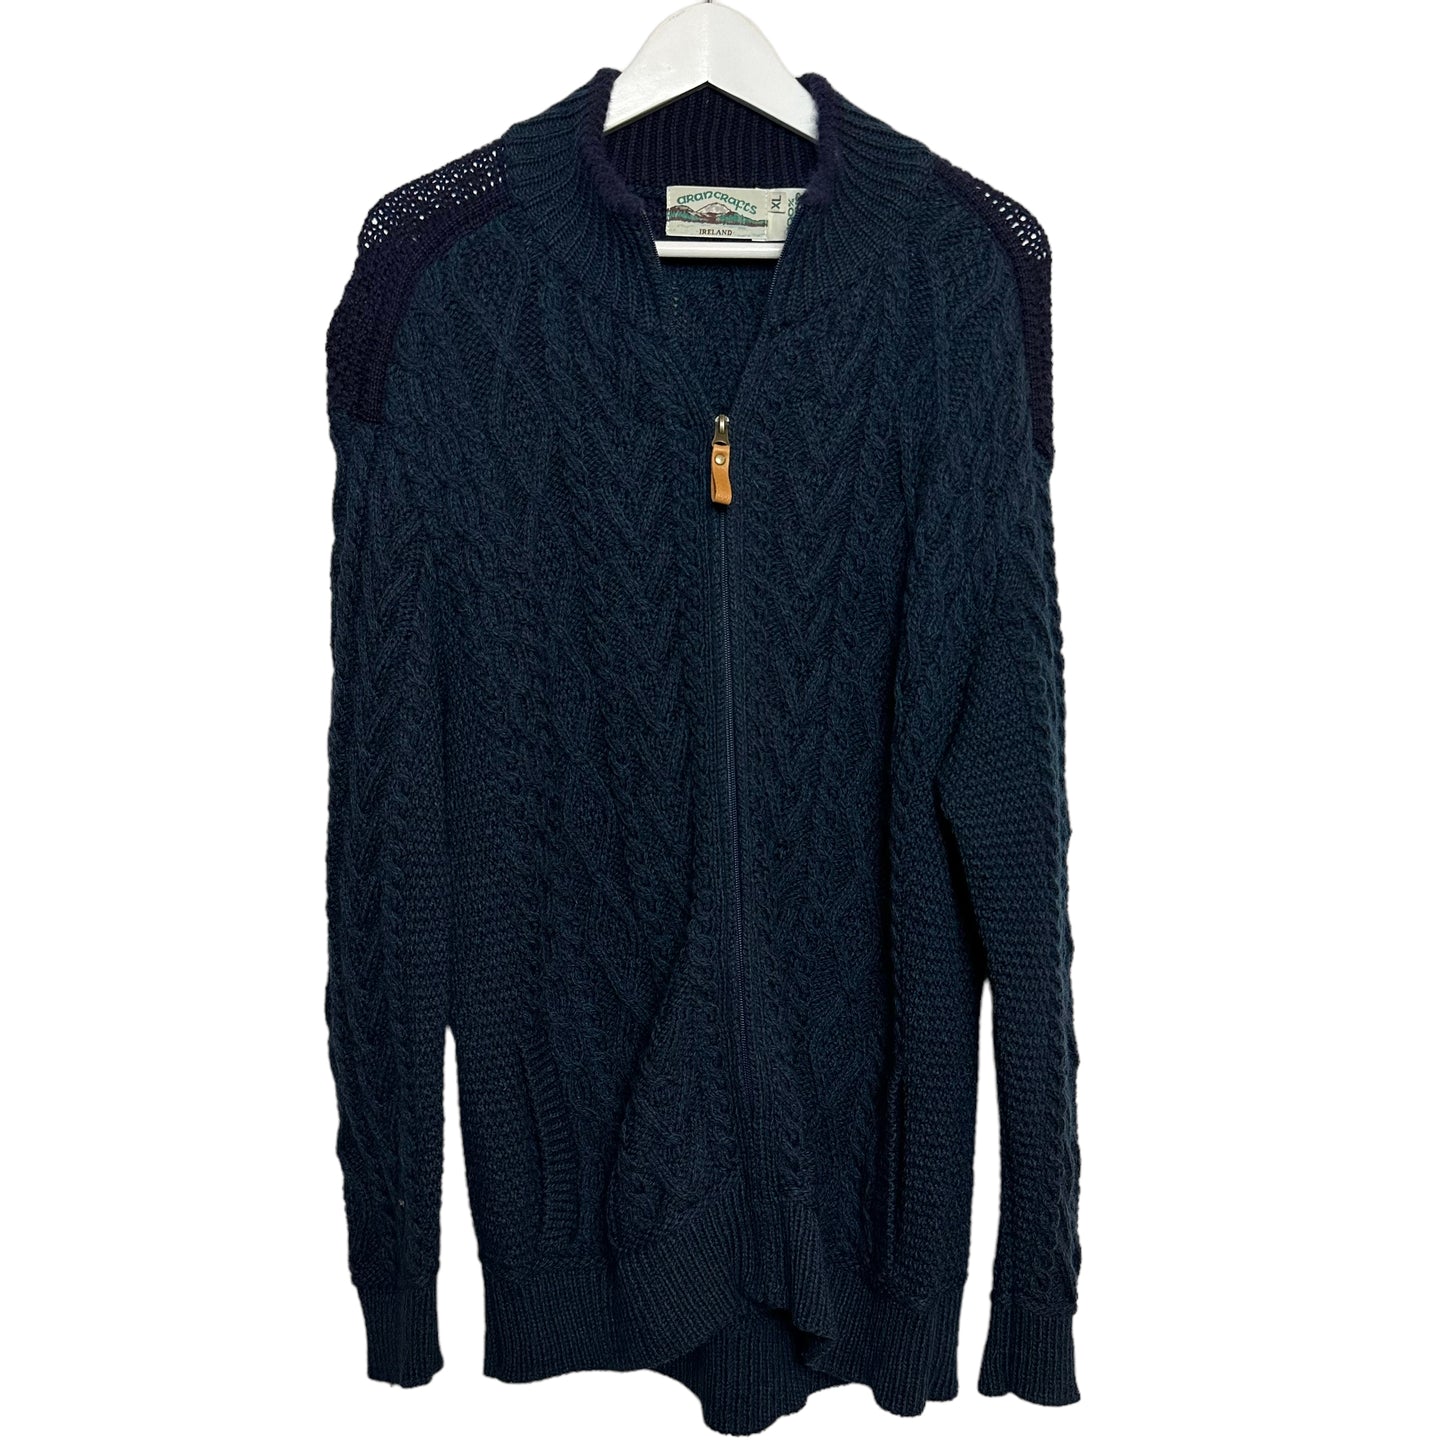 Aran Crafts Ireland 100% Merino Wool Cardigan Sweater Blue Chunky Knit XL